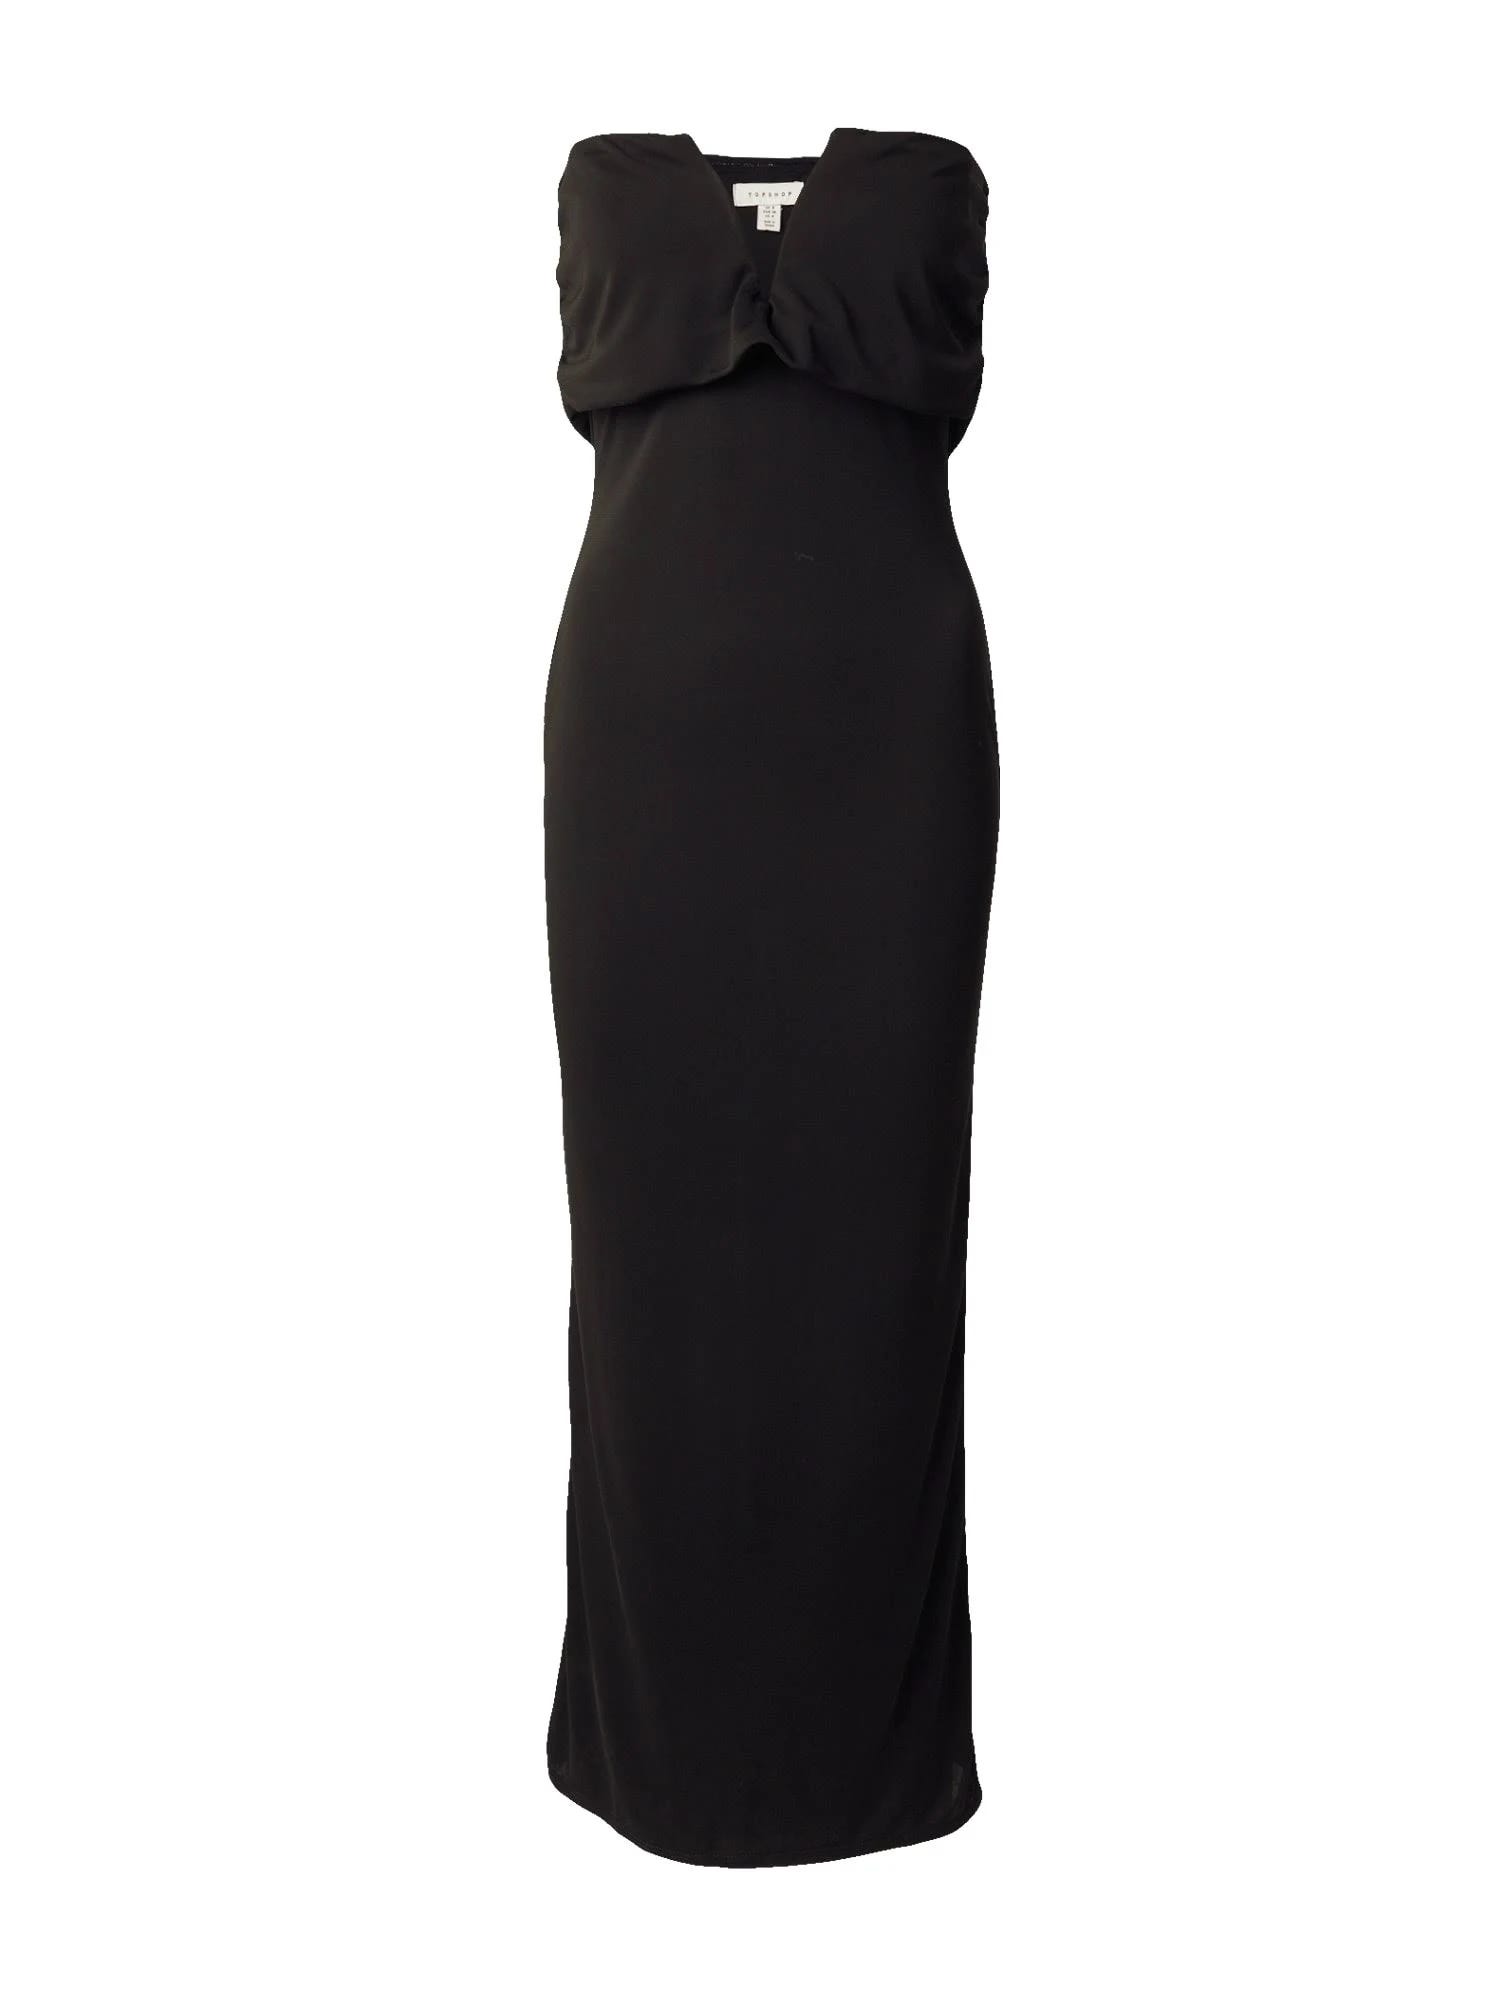 Black Off-the-Shoulder Notch Neck Midi Dress by Topshop | Image